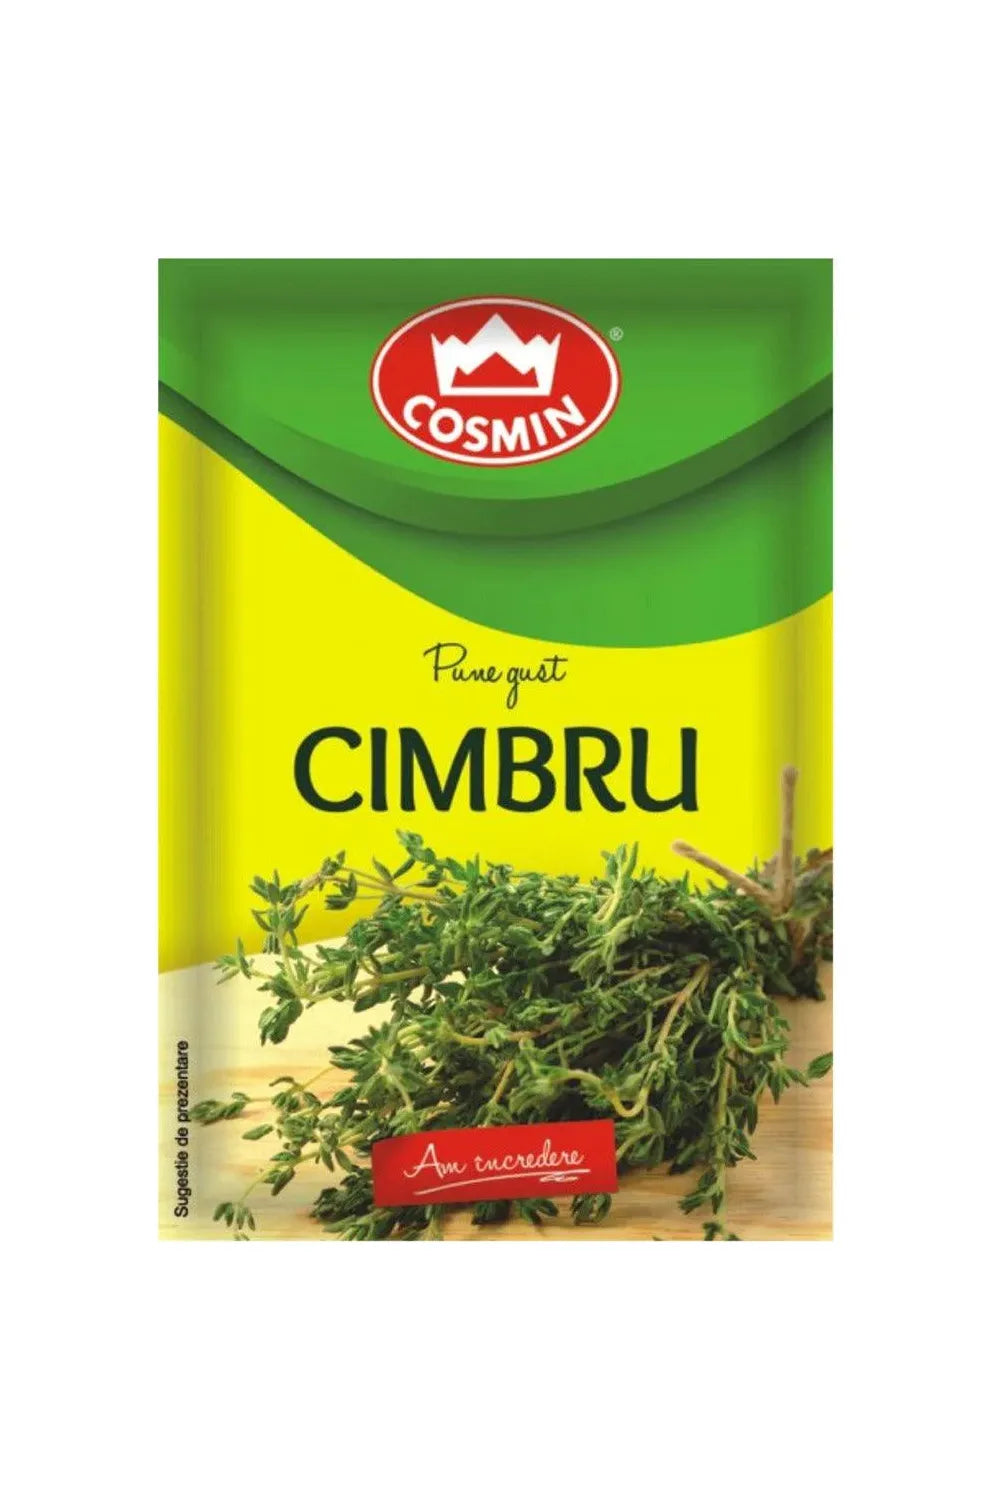 CIMBRU - Savory - Cosmin - 8g